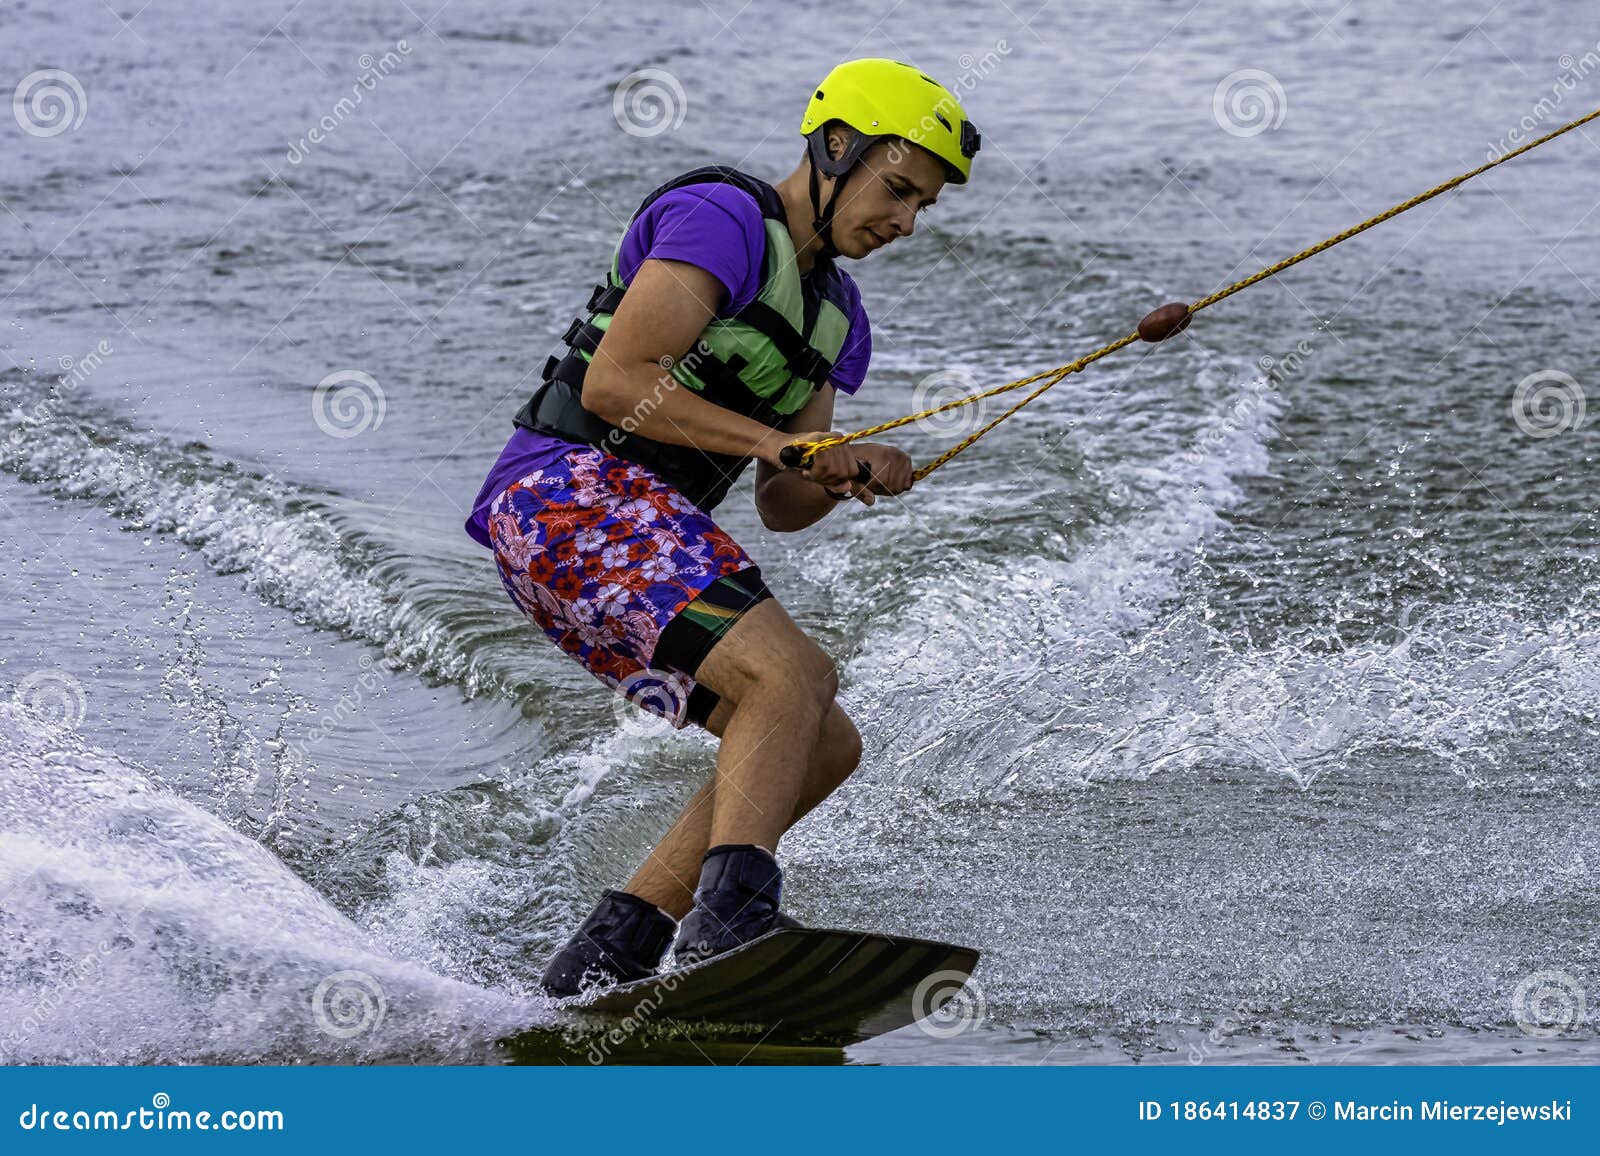 teenager wakeboarding on a lake - brwinow, masovia, poland